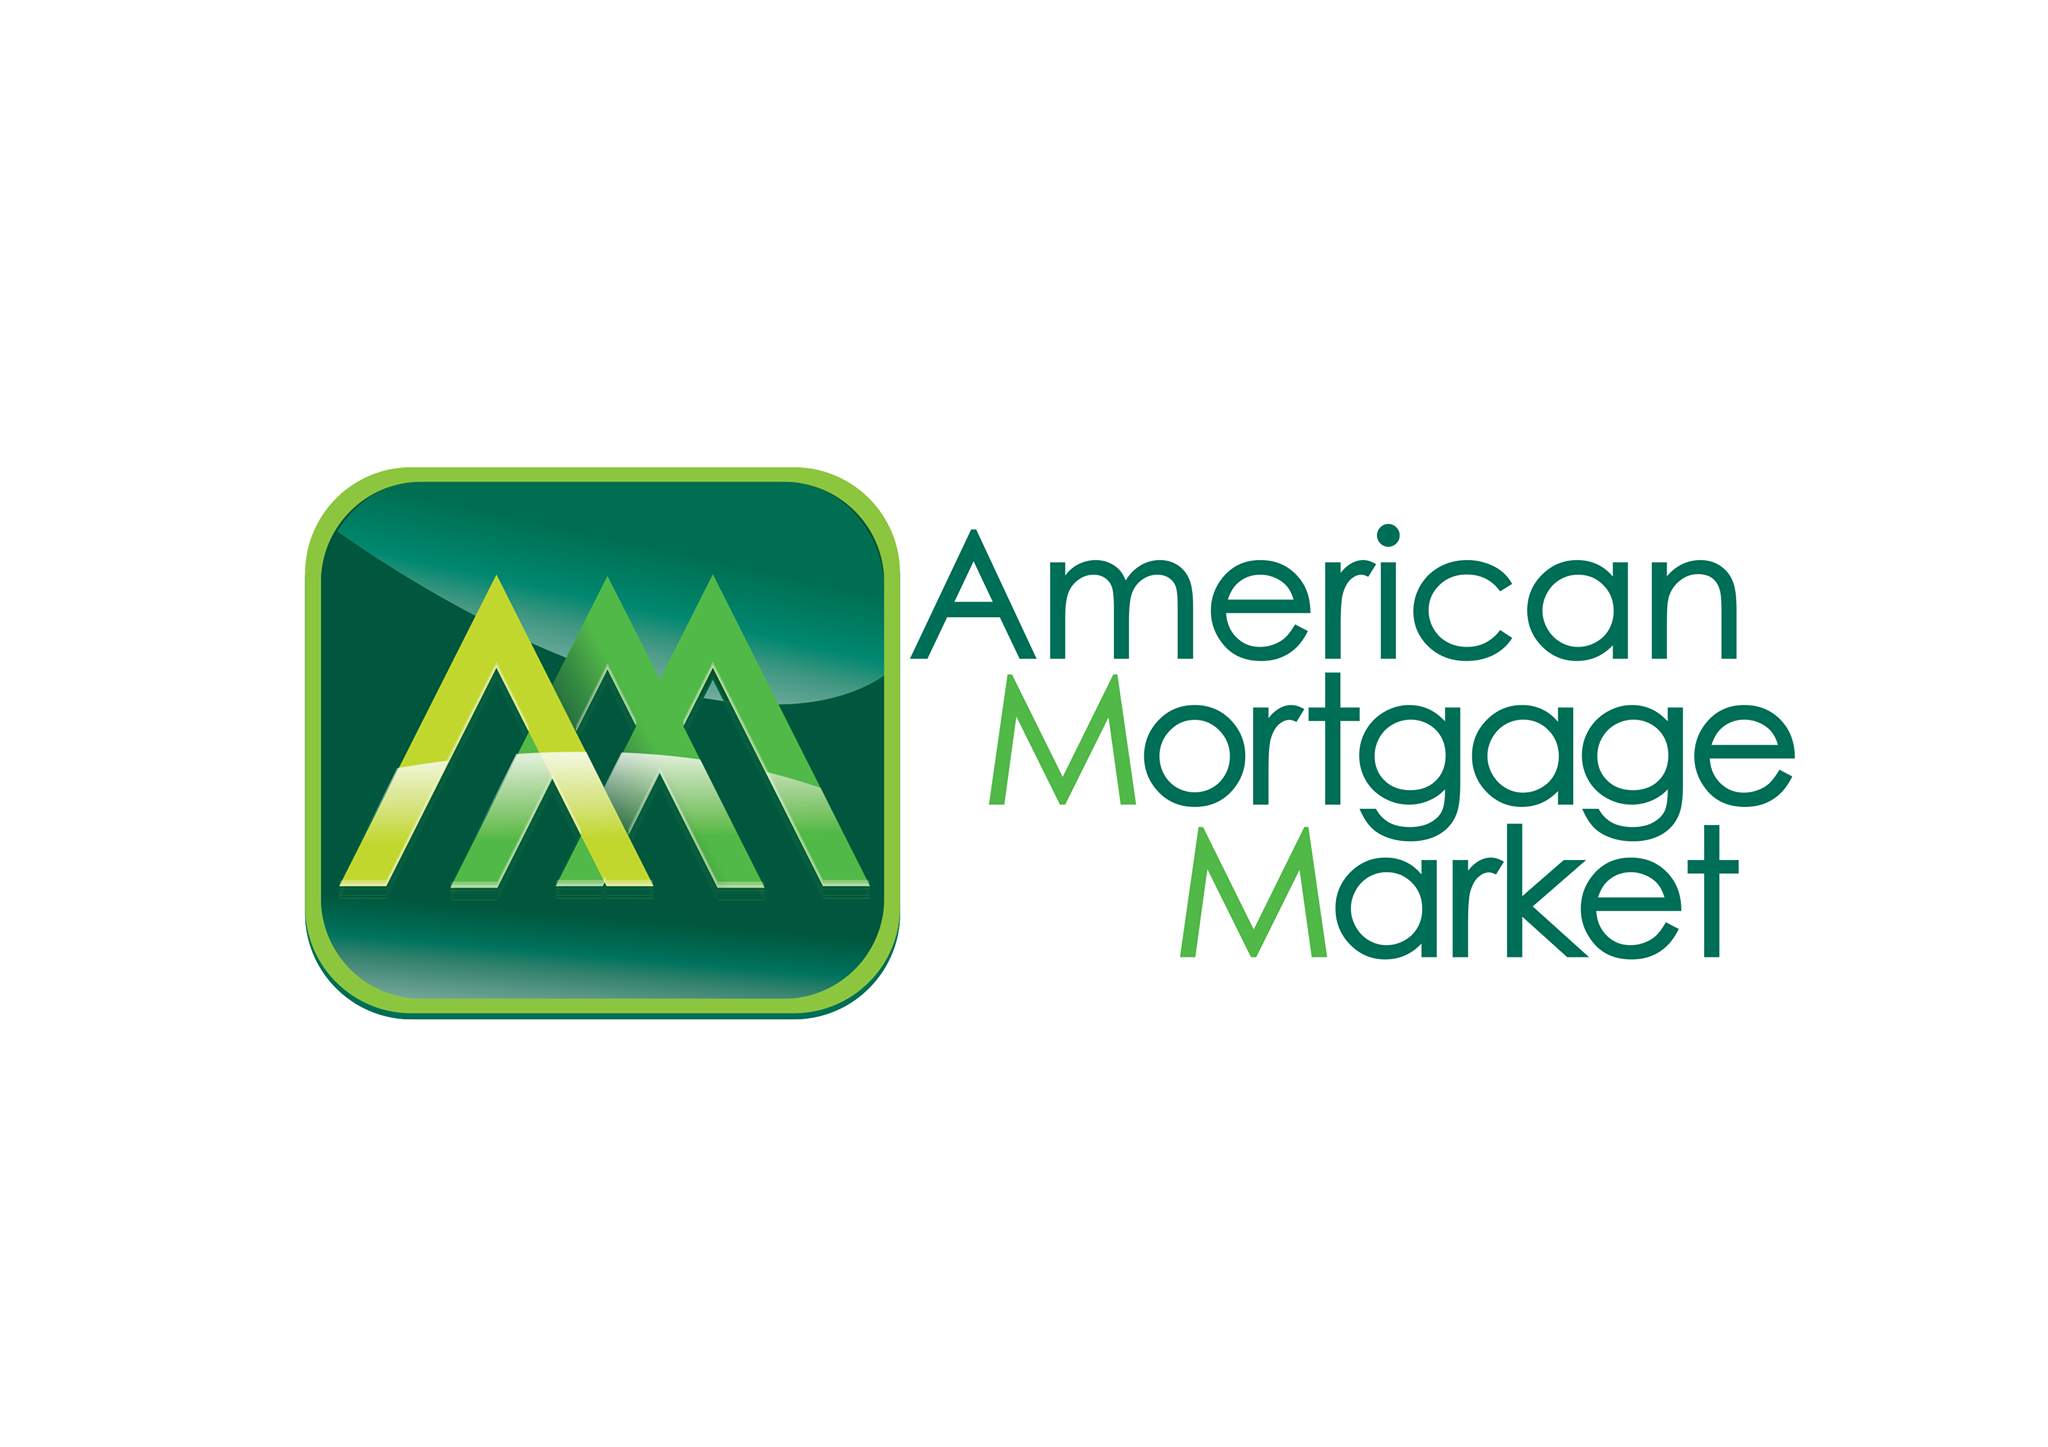 American Mortgage Market logo